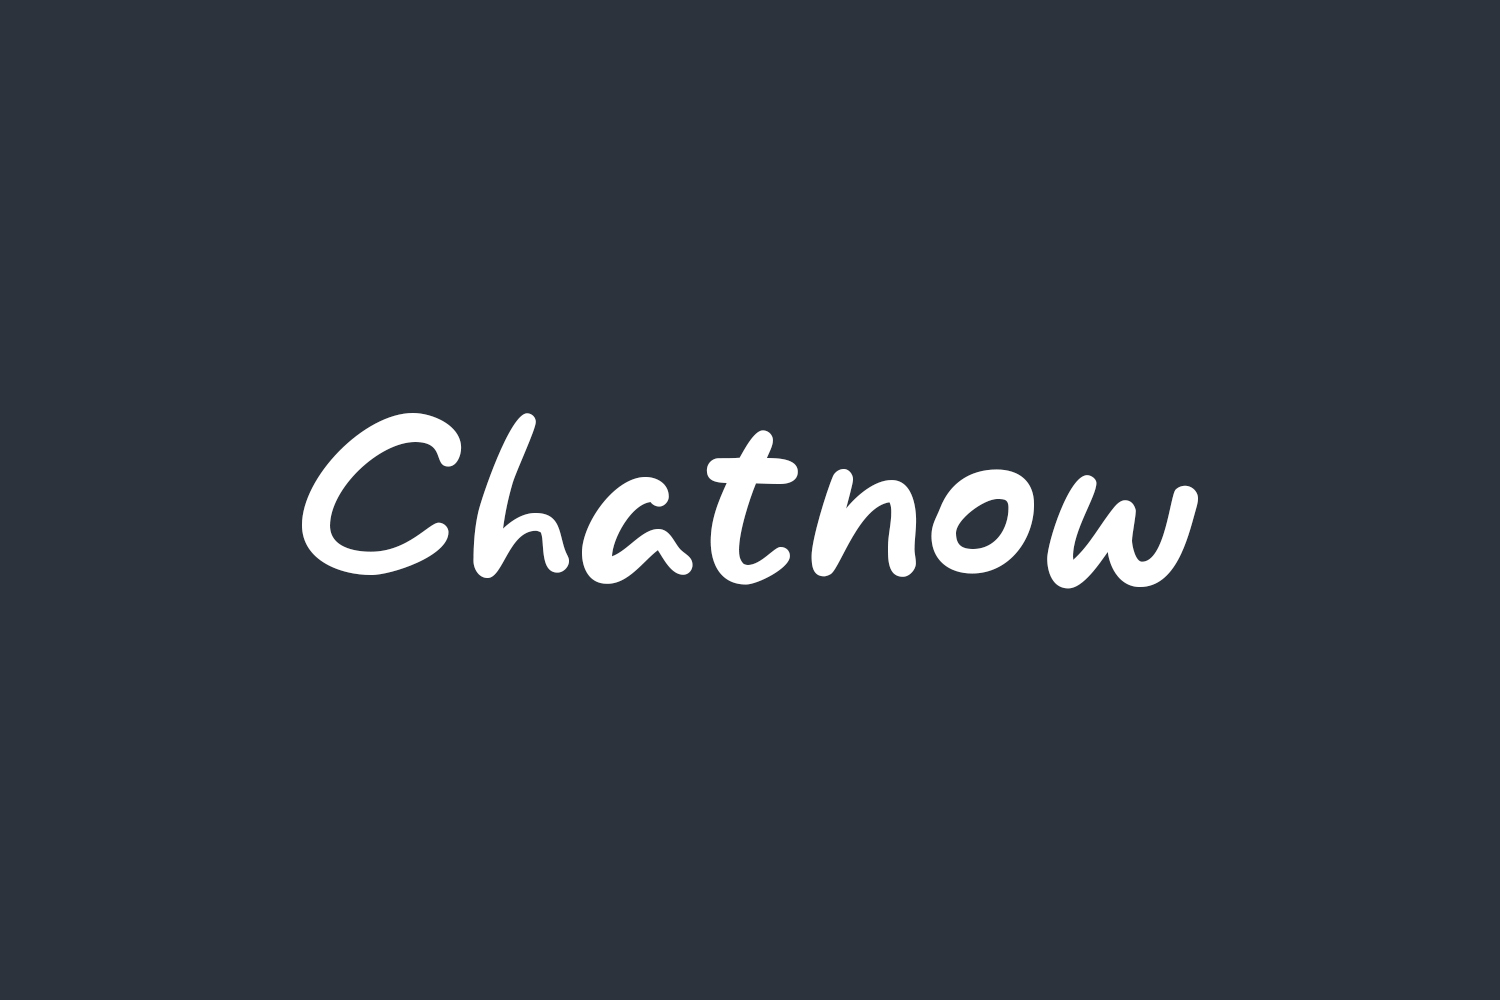 Chatnow Free Font